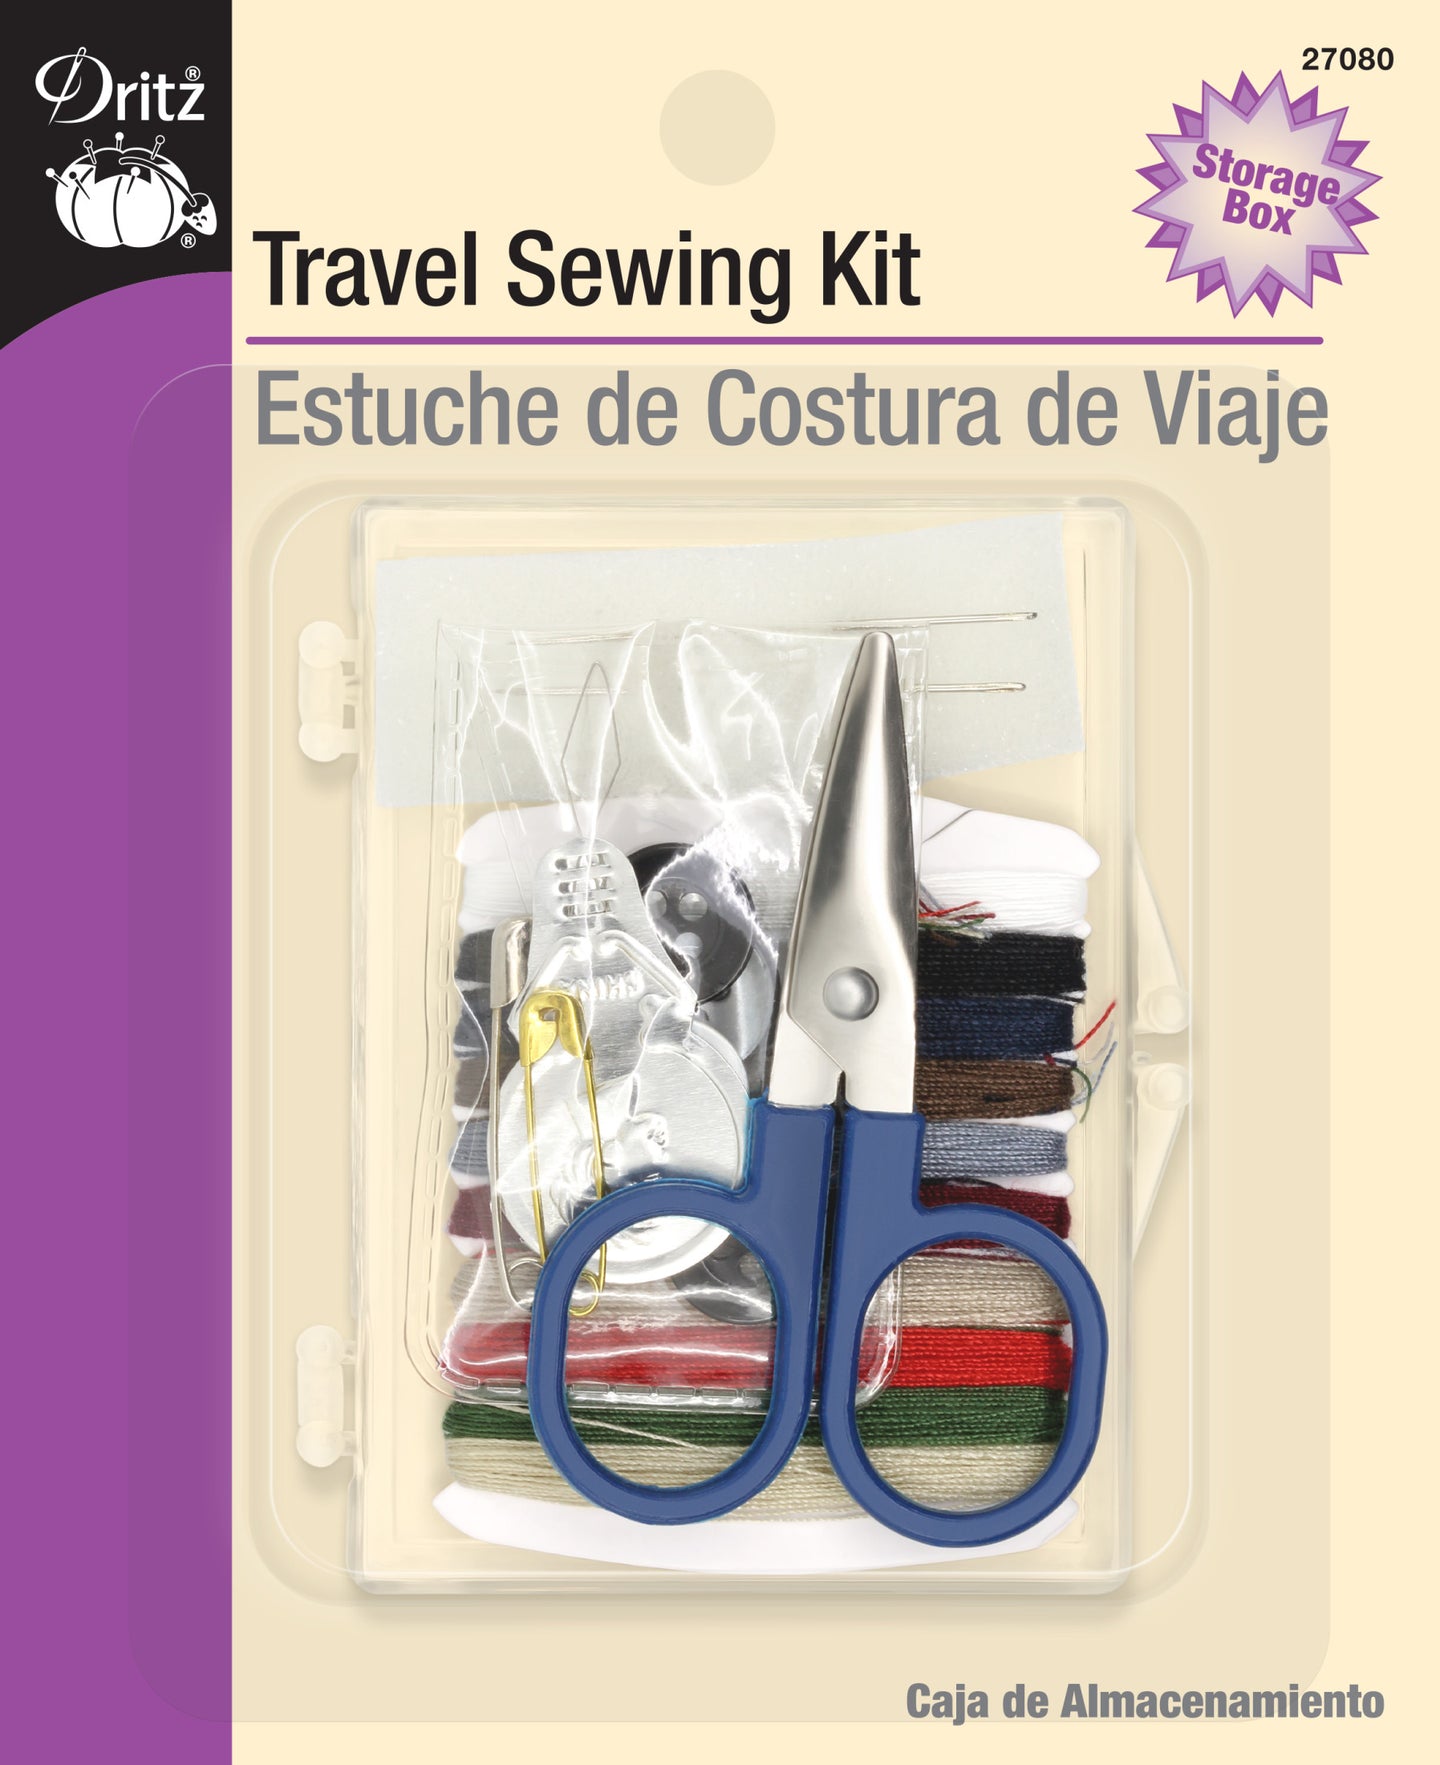 Needle Knitting Storage Bag Crochet Hooks Thread Sewing Kit Case Organizer  Packs